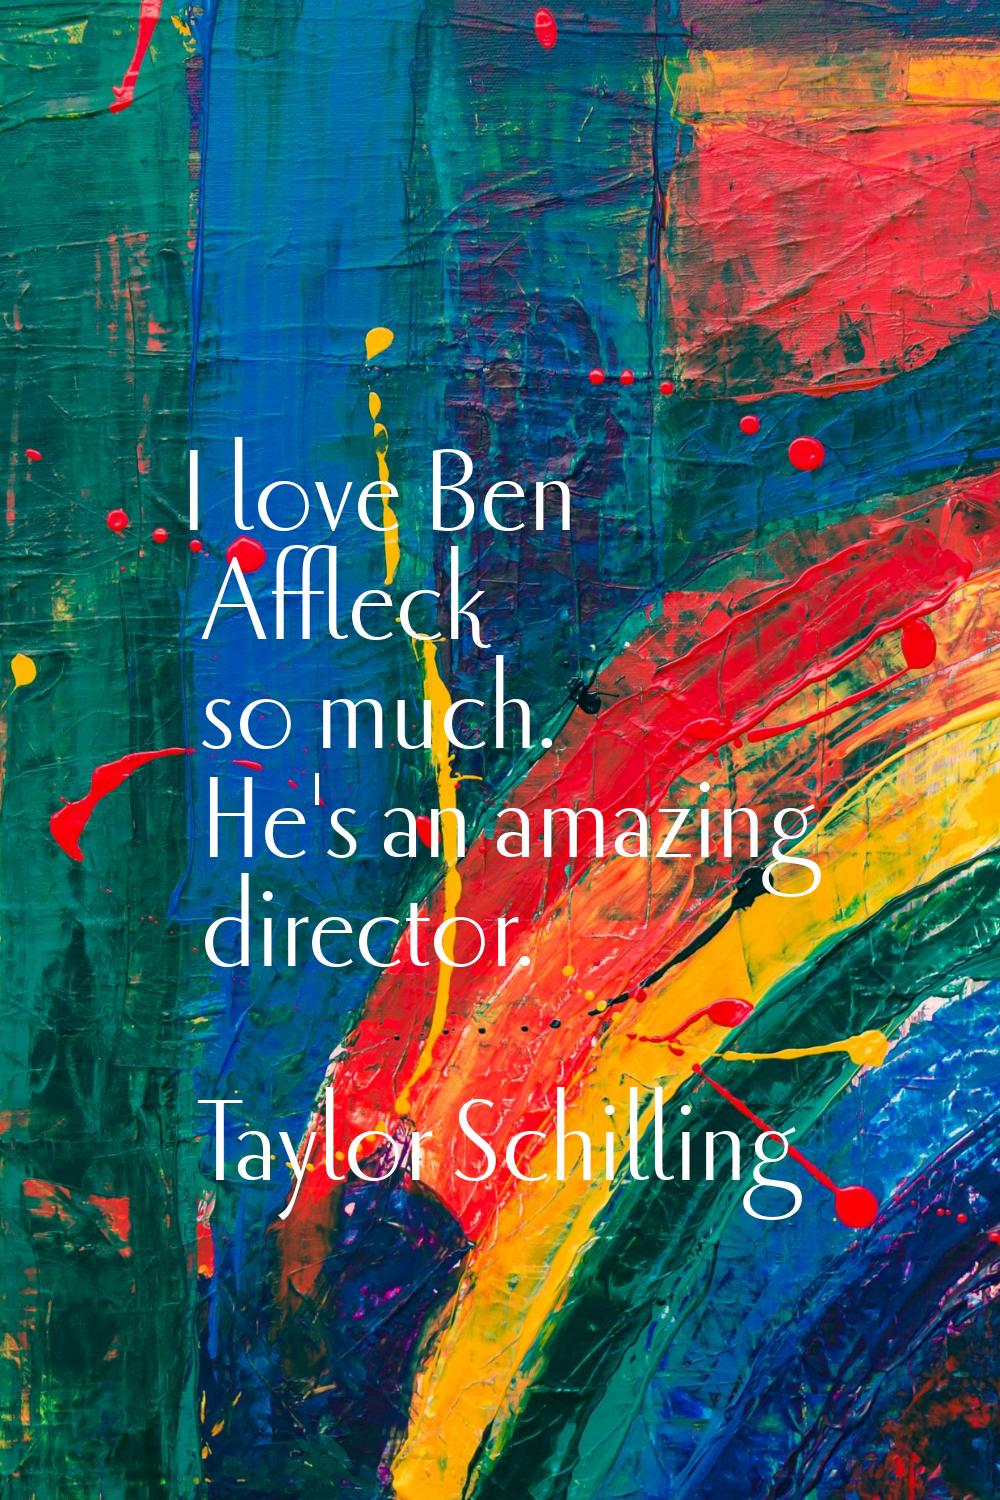 I love Ben Affleck so much. He's an amazing director.